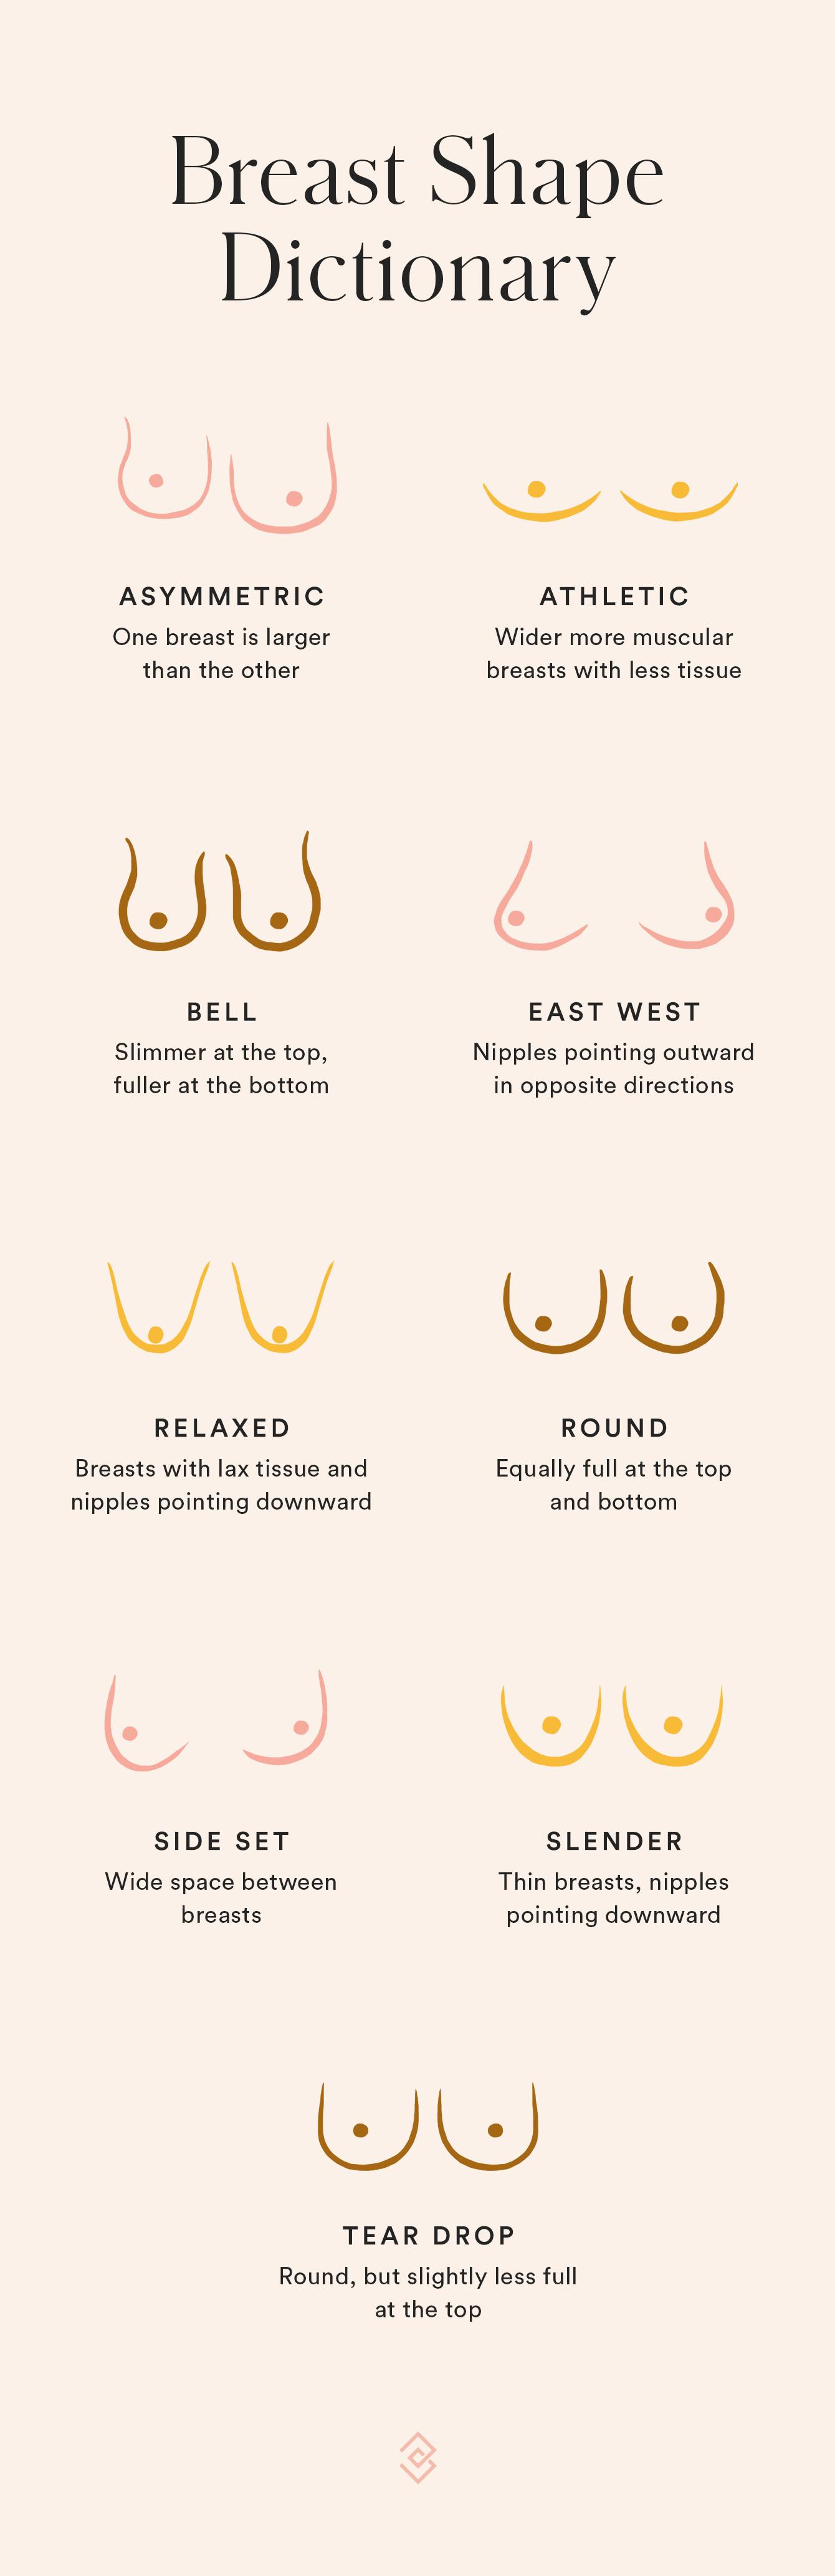 Large Round Nipples